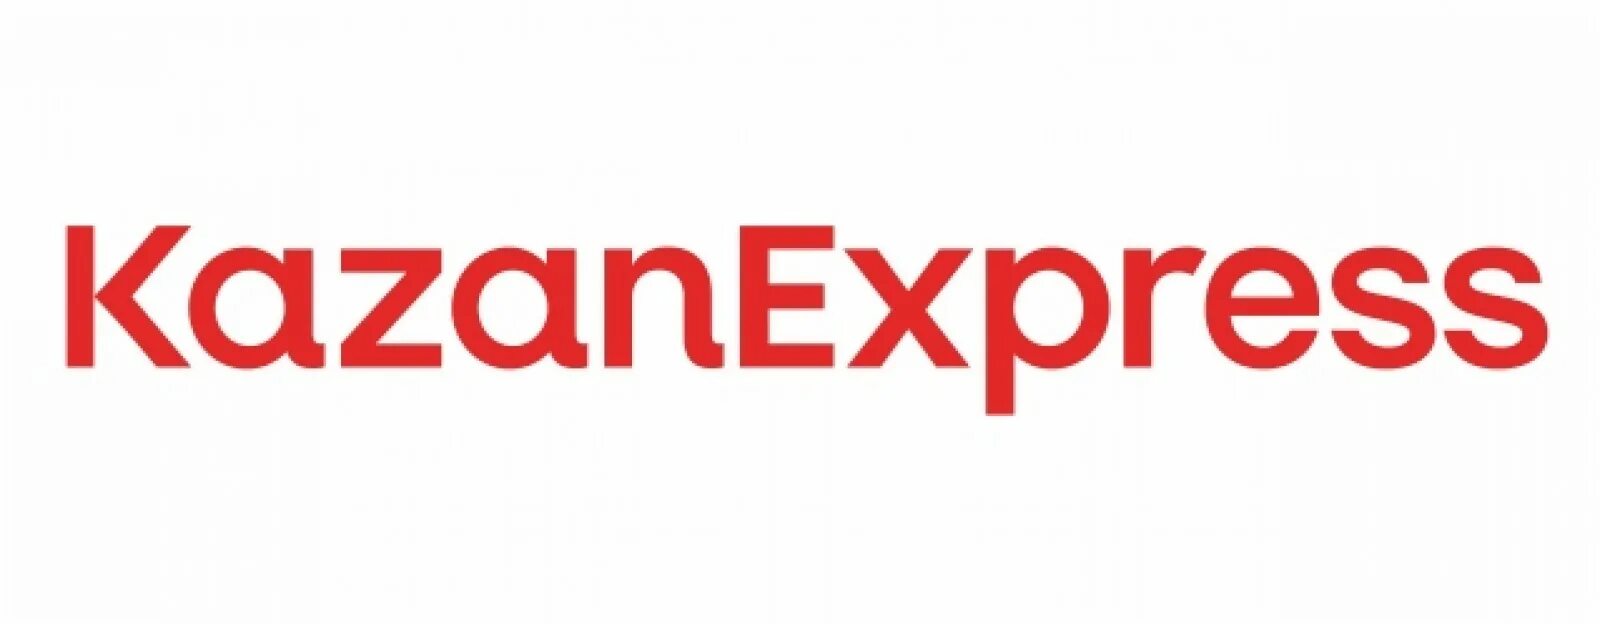 KAZANEXPRESS логотип. Казань экспресс логотип. Логотип казаньэстпресс. Логотип кащанэкспресс. Сайт казан экспресс